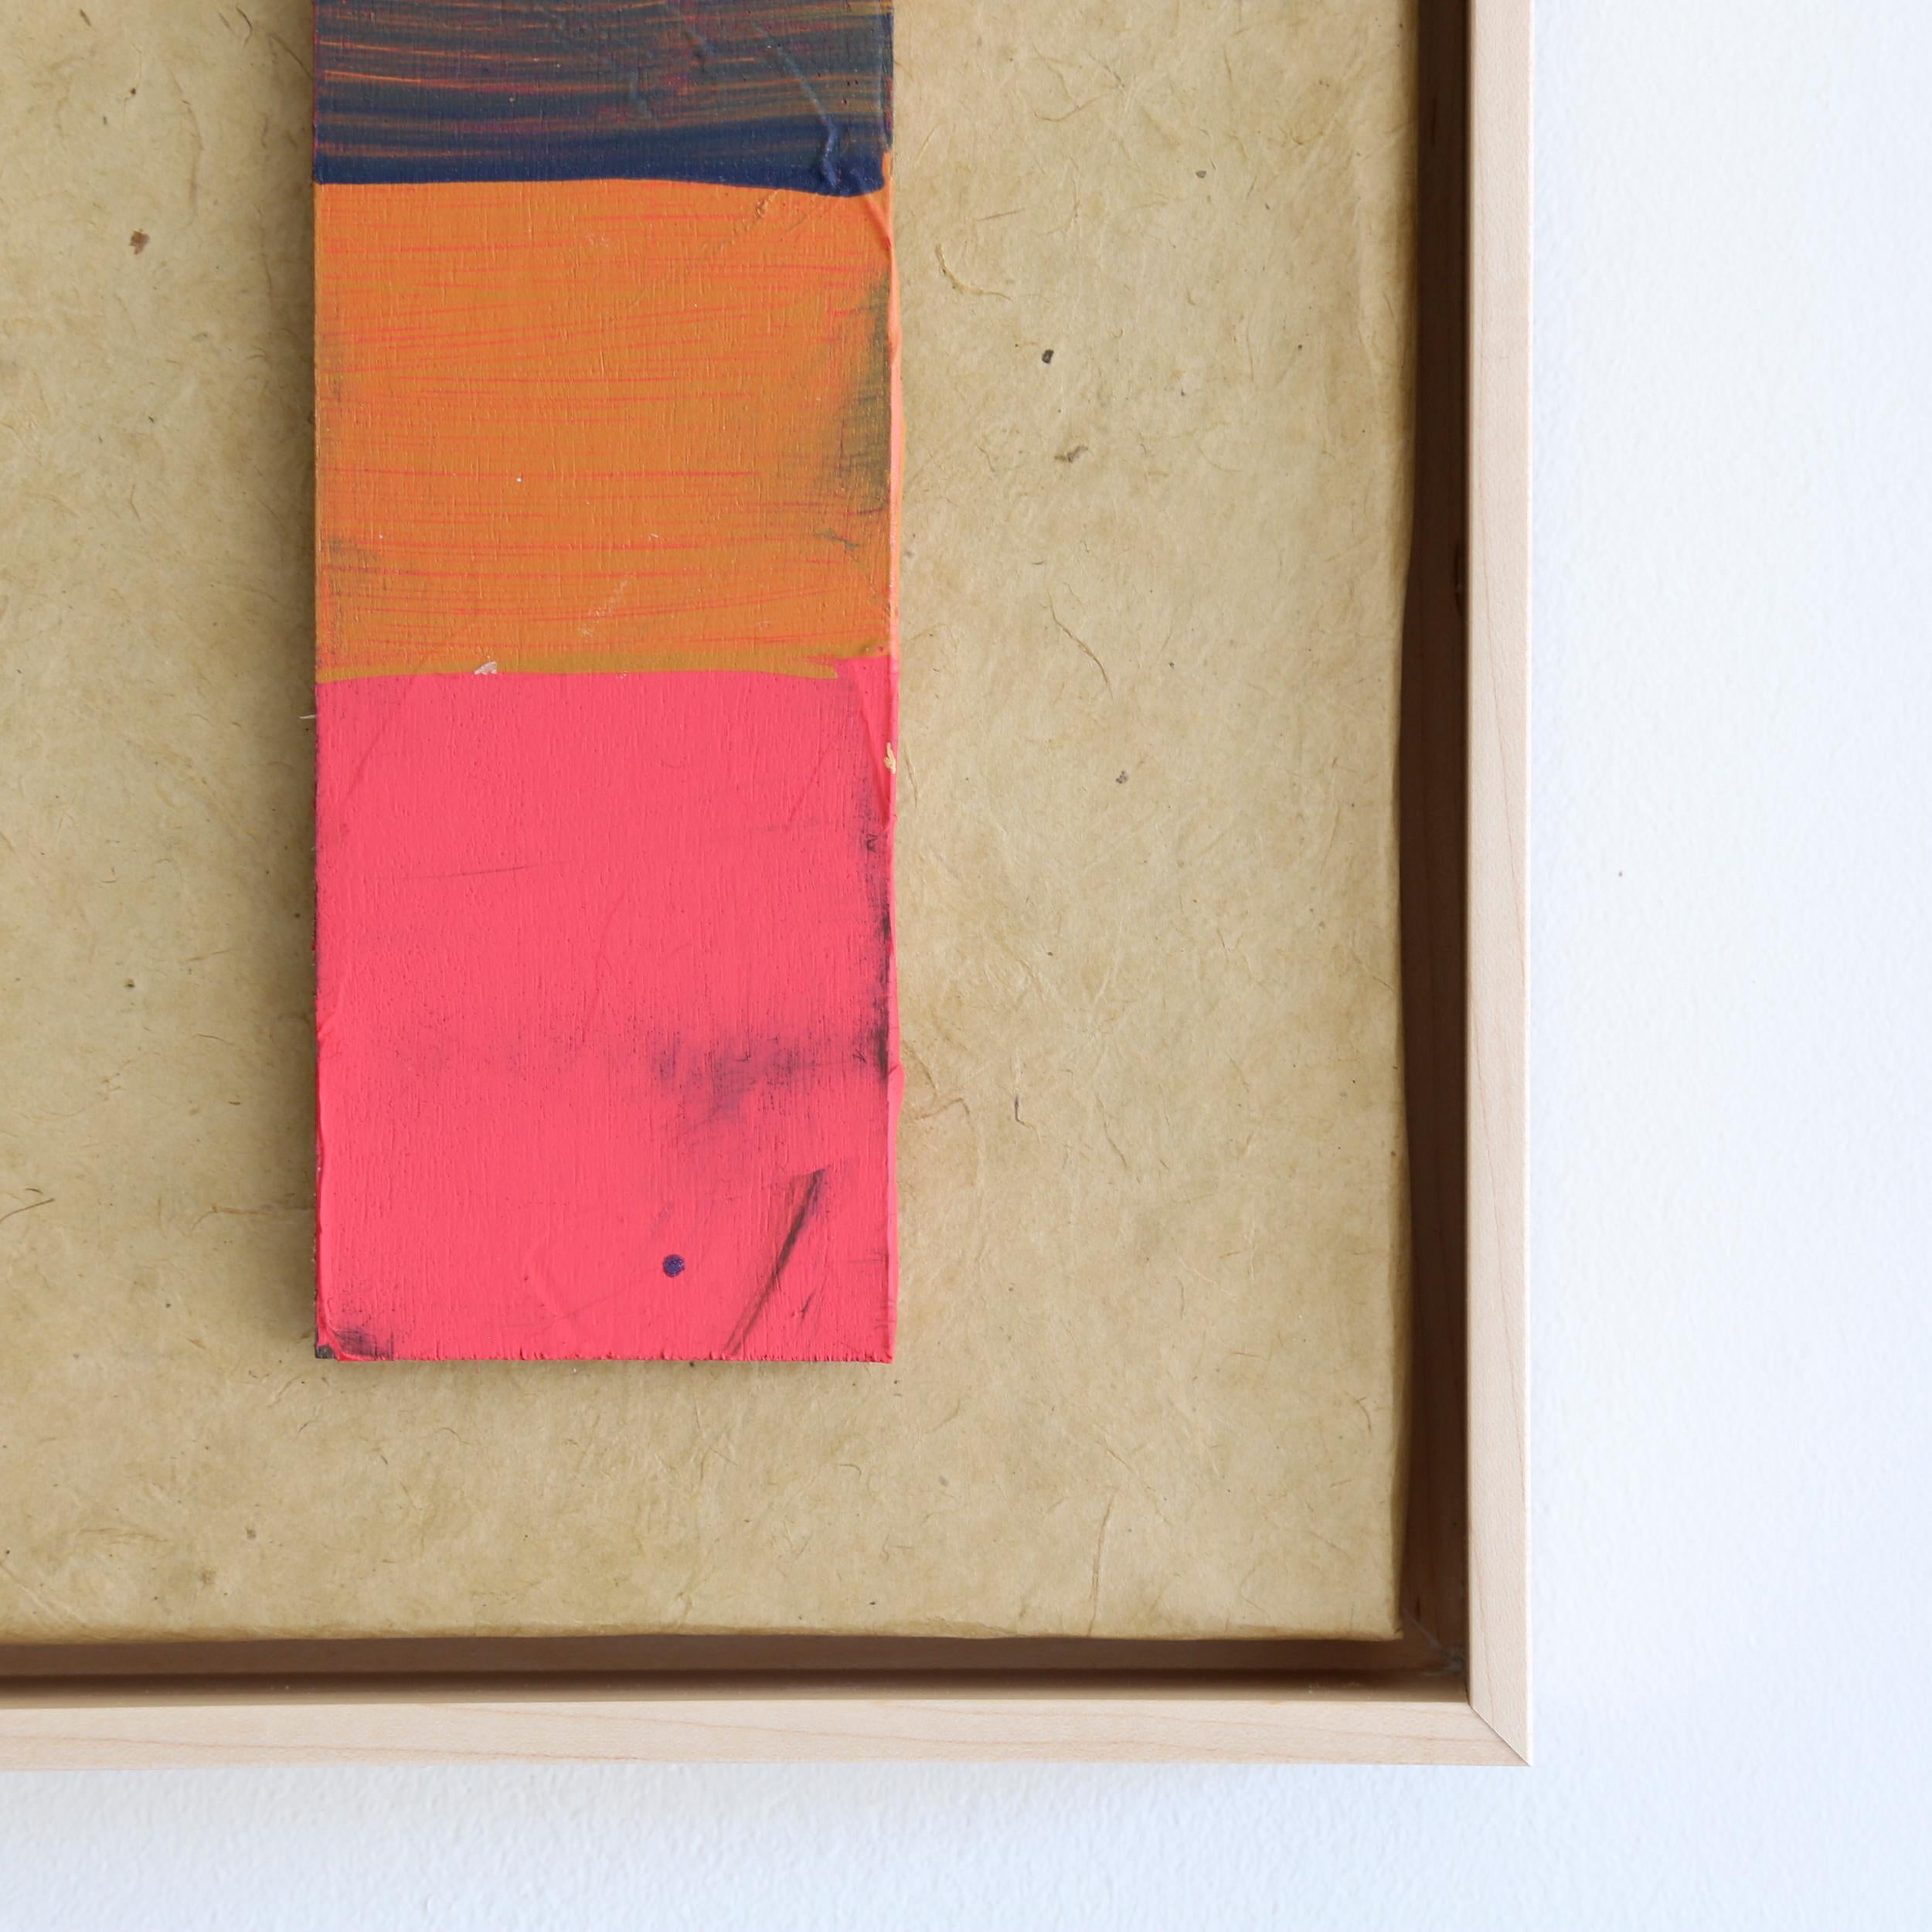 Kim Fonder
COLLAGE RISORSE NATURALI XV
Tibetan Handmade paper, acrylic pigment in float frame
11.00 X 9.50 in
$575.00